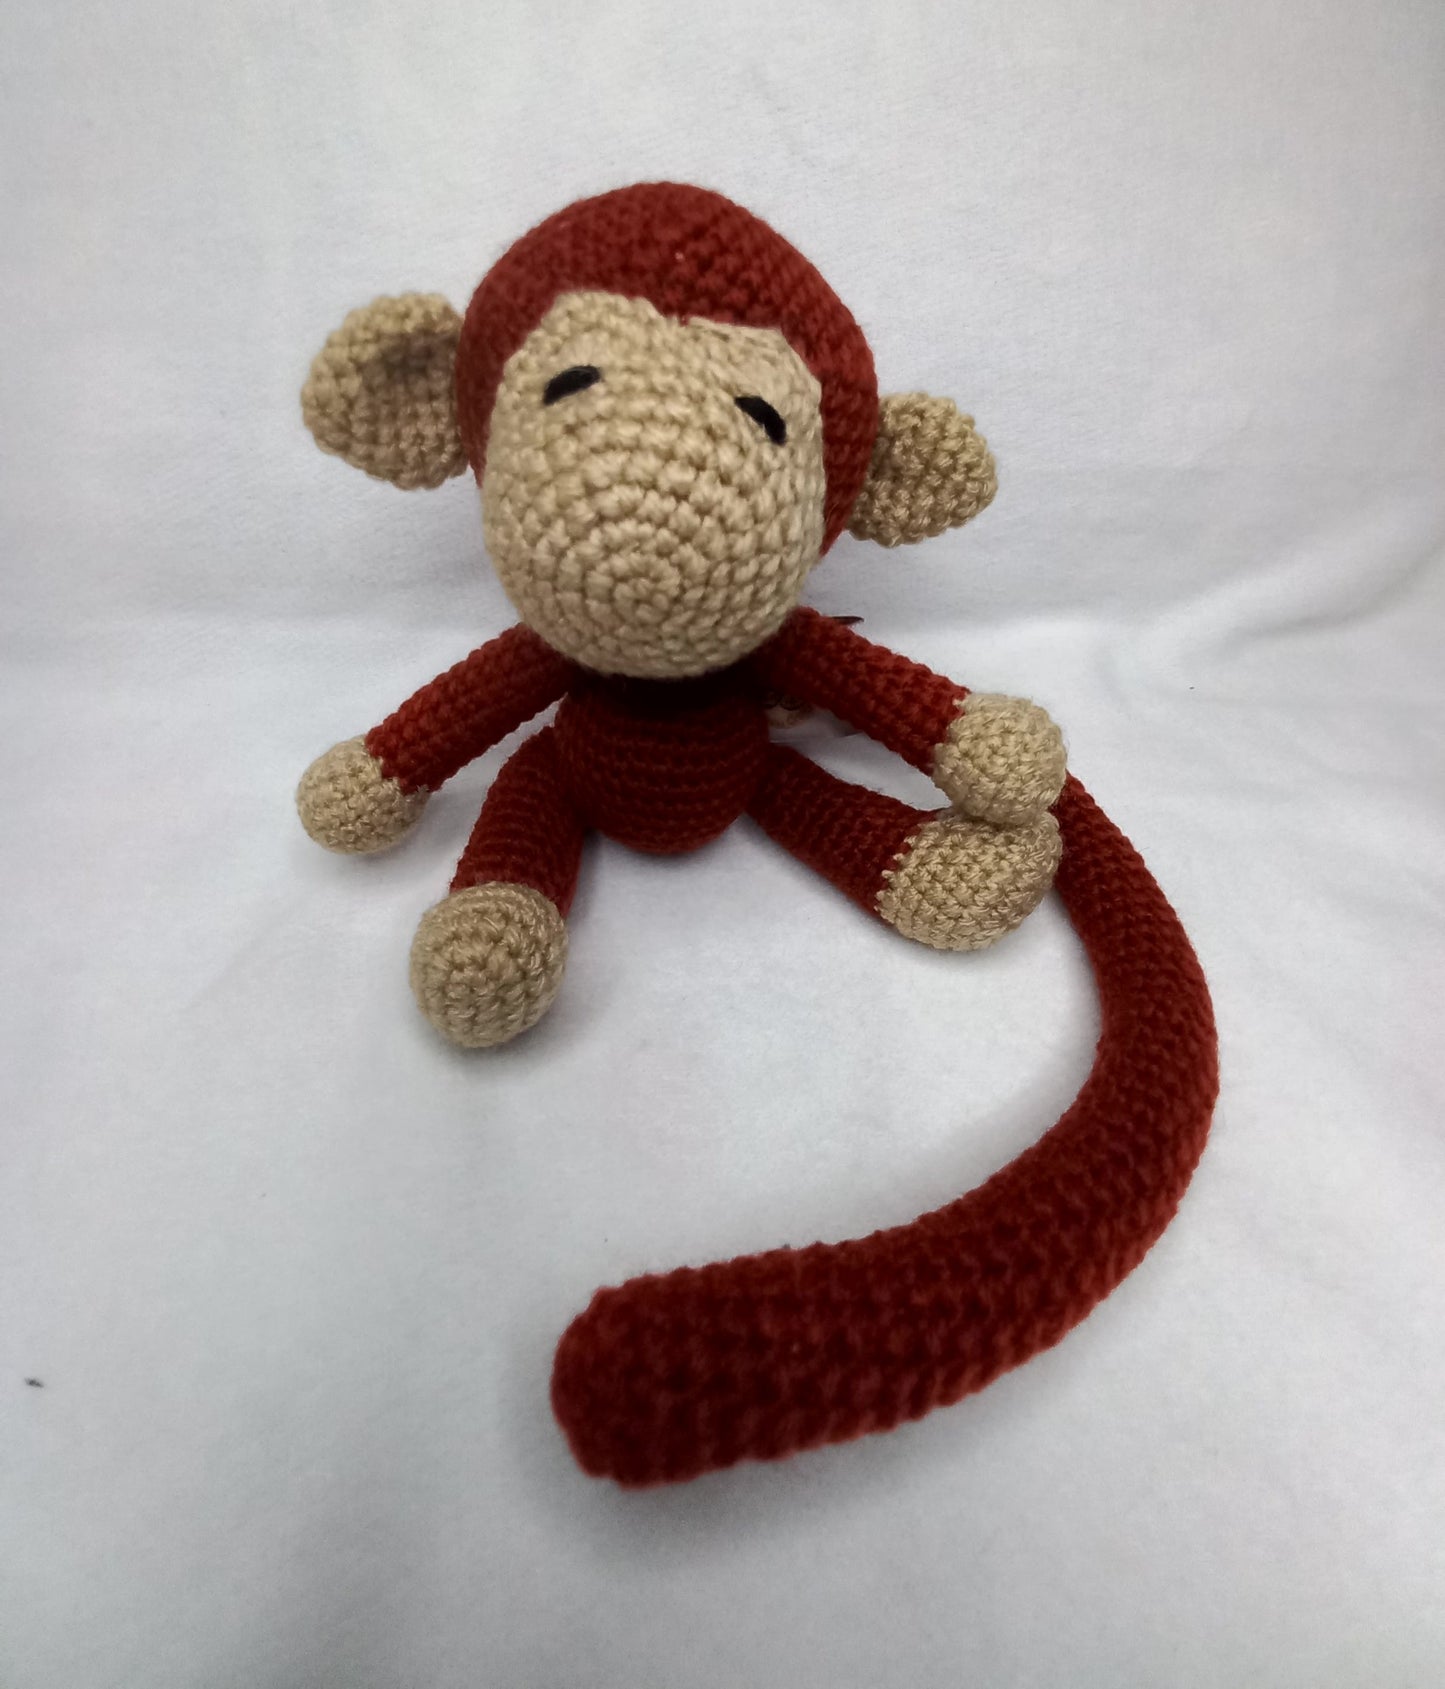 Handmade Crochet Cute Monkey toy - Soft stuffed animal toy